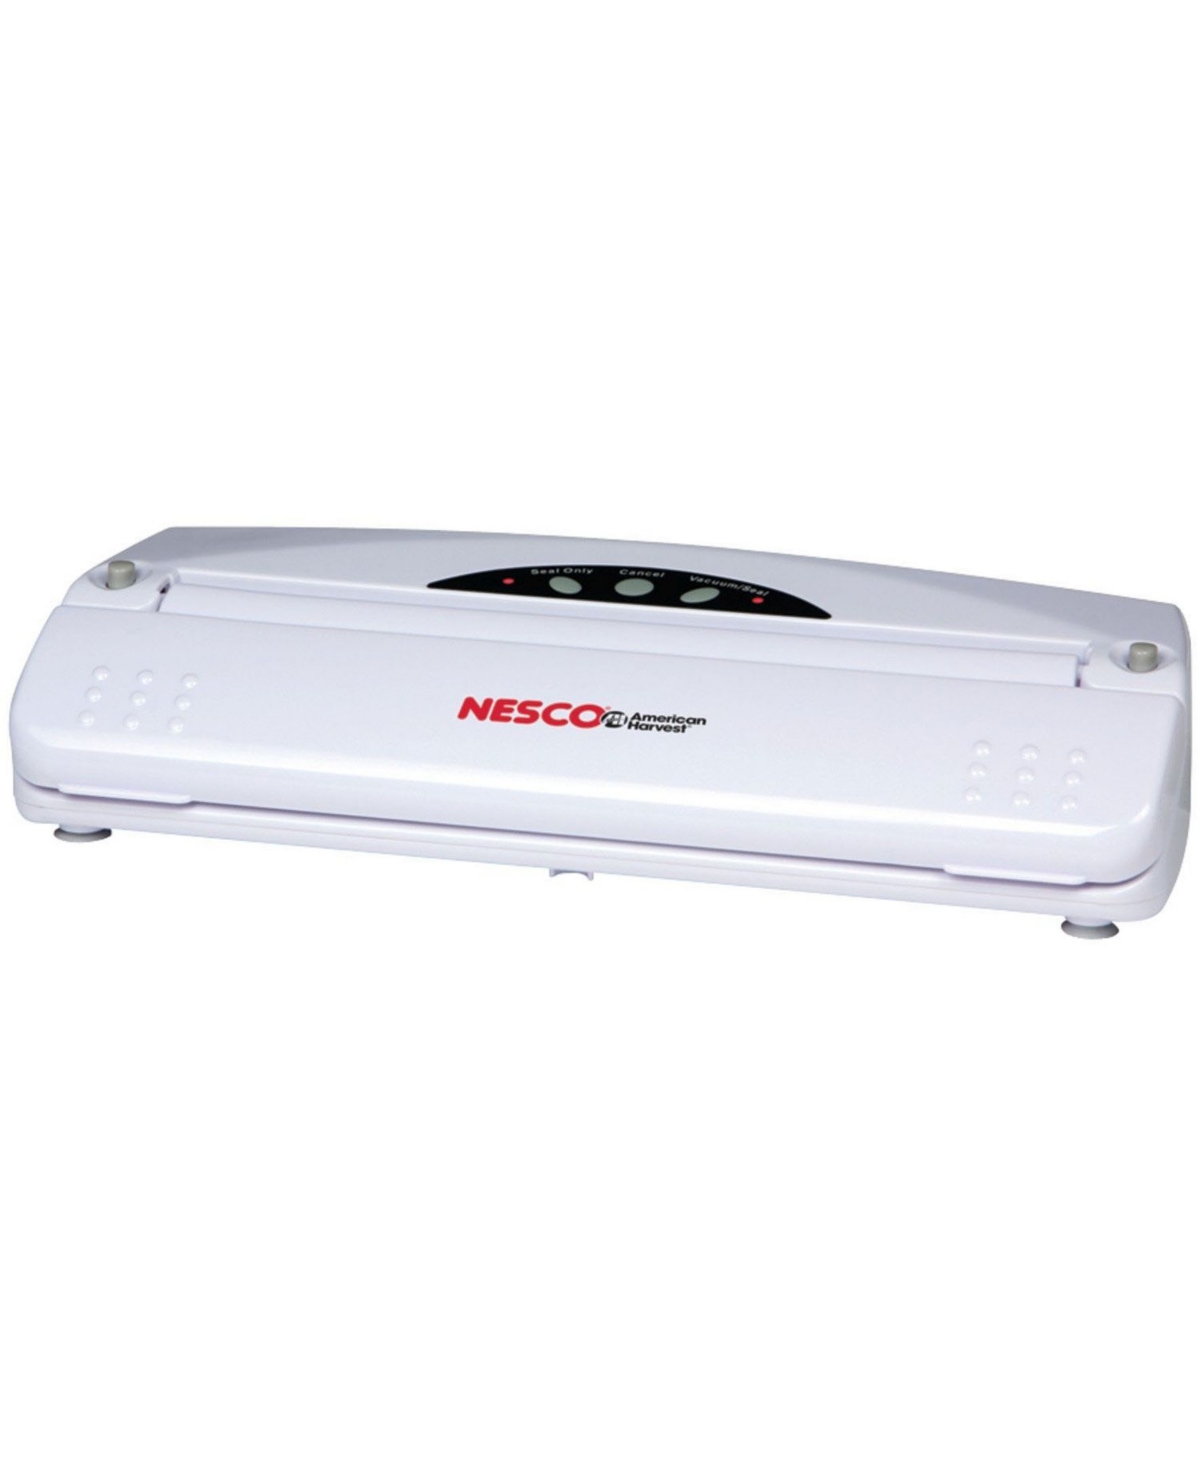 Nesco Vs-01 Vacuum Food Sealer